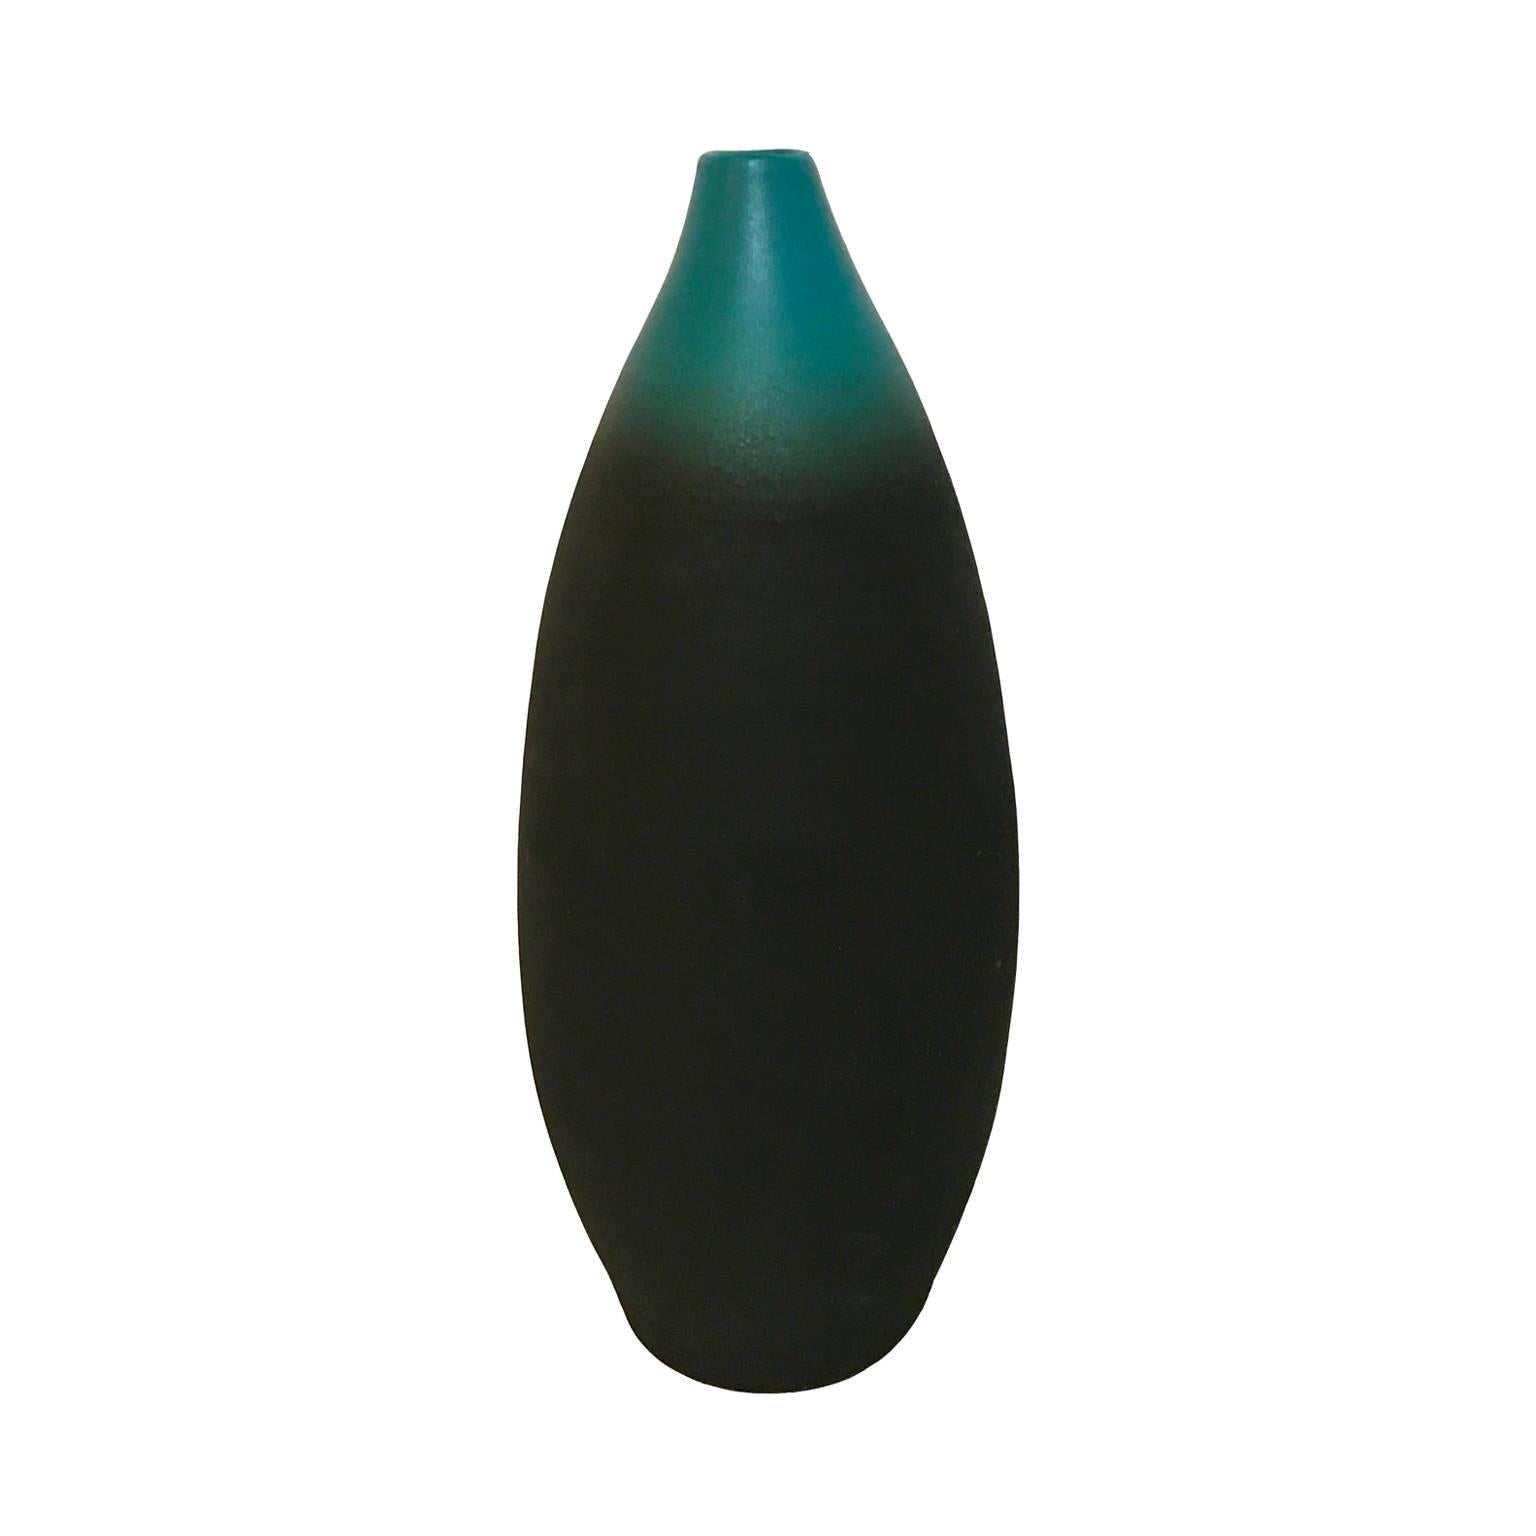 Turquoise Ombre Matte Ceramic Bottle Form Vase with Stout Neck by Sandi Fellman